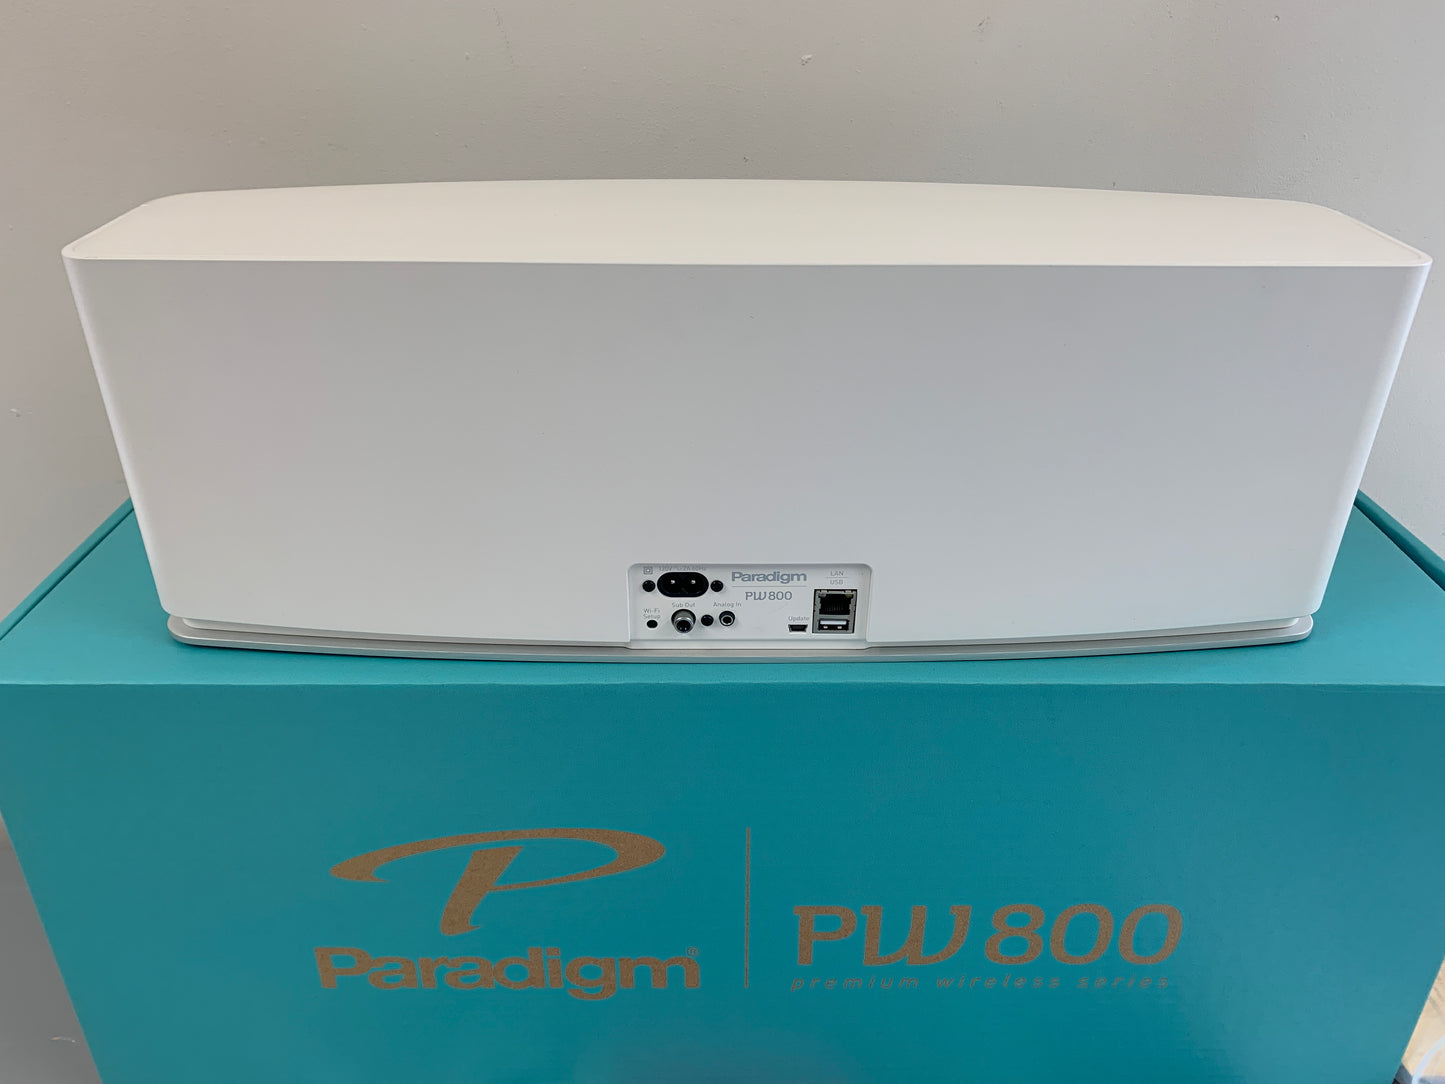 Paradigm PW800 Multimedia Speaker * Wifi * DTS * Box and Accessories